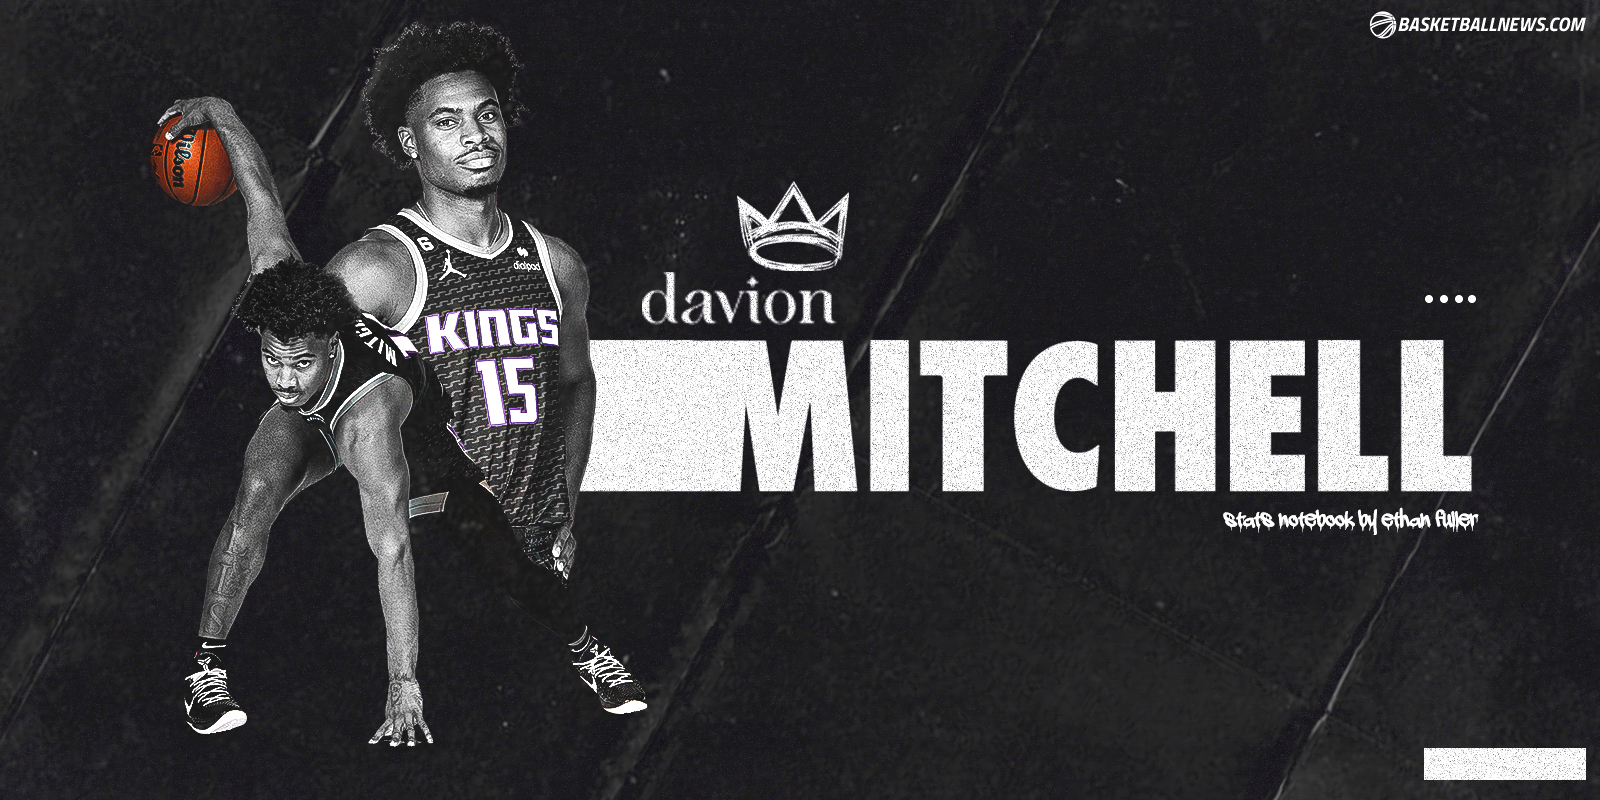 Utah Jazz's Donovan Mitchell, Baylor's Davion Mitchell share many